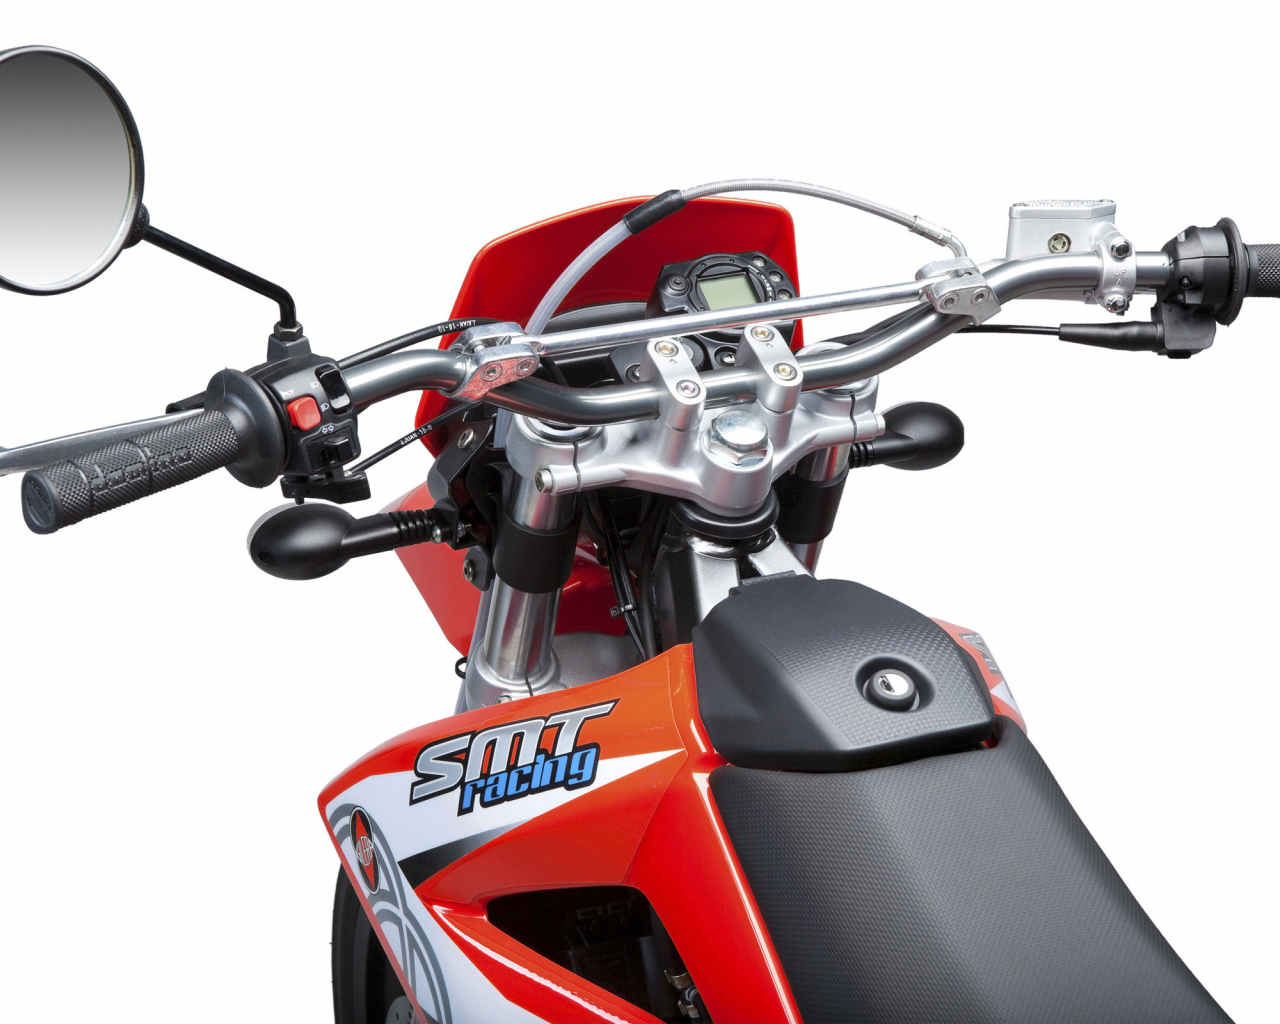 Supermotard, мото, motorbike, moto, мотоциклы, motorcycle, Gilera, SMT 50, SMT 50 2011